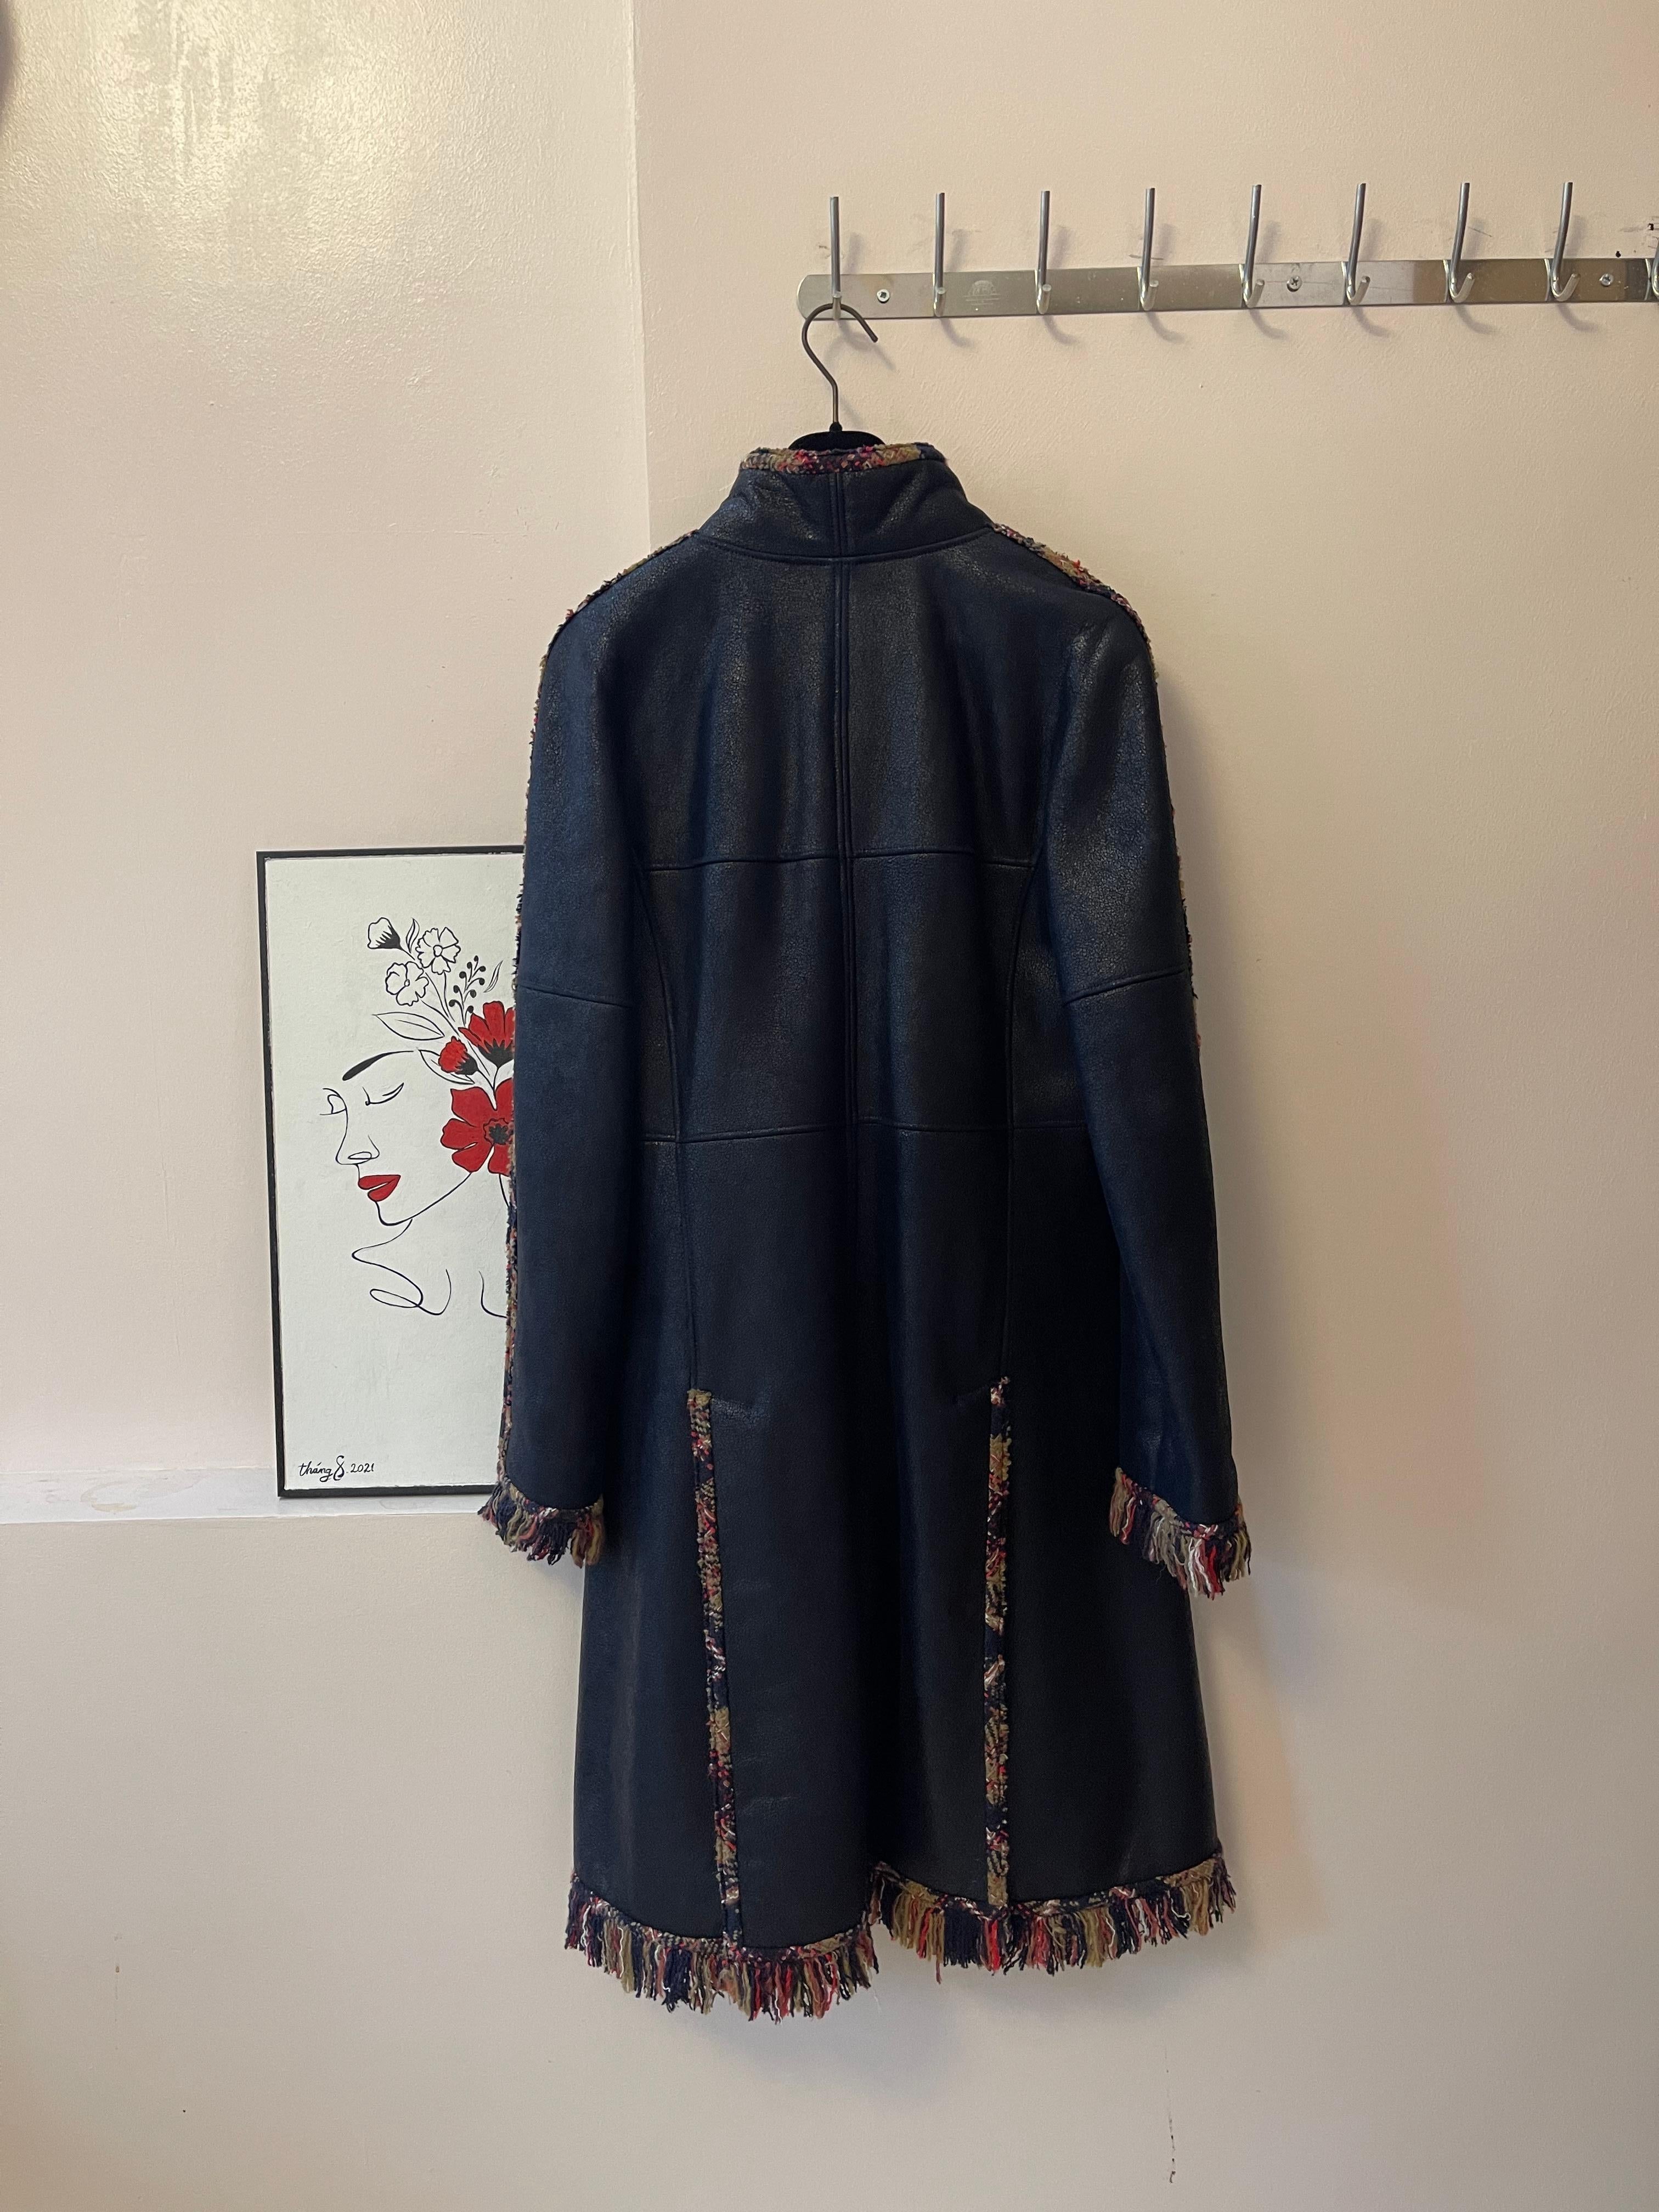 Unique 2013 CHANEL Edinburg Collection Tweed Shearling Coat For Sale 1